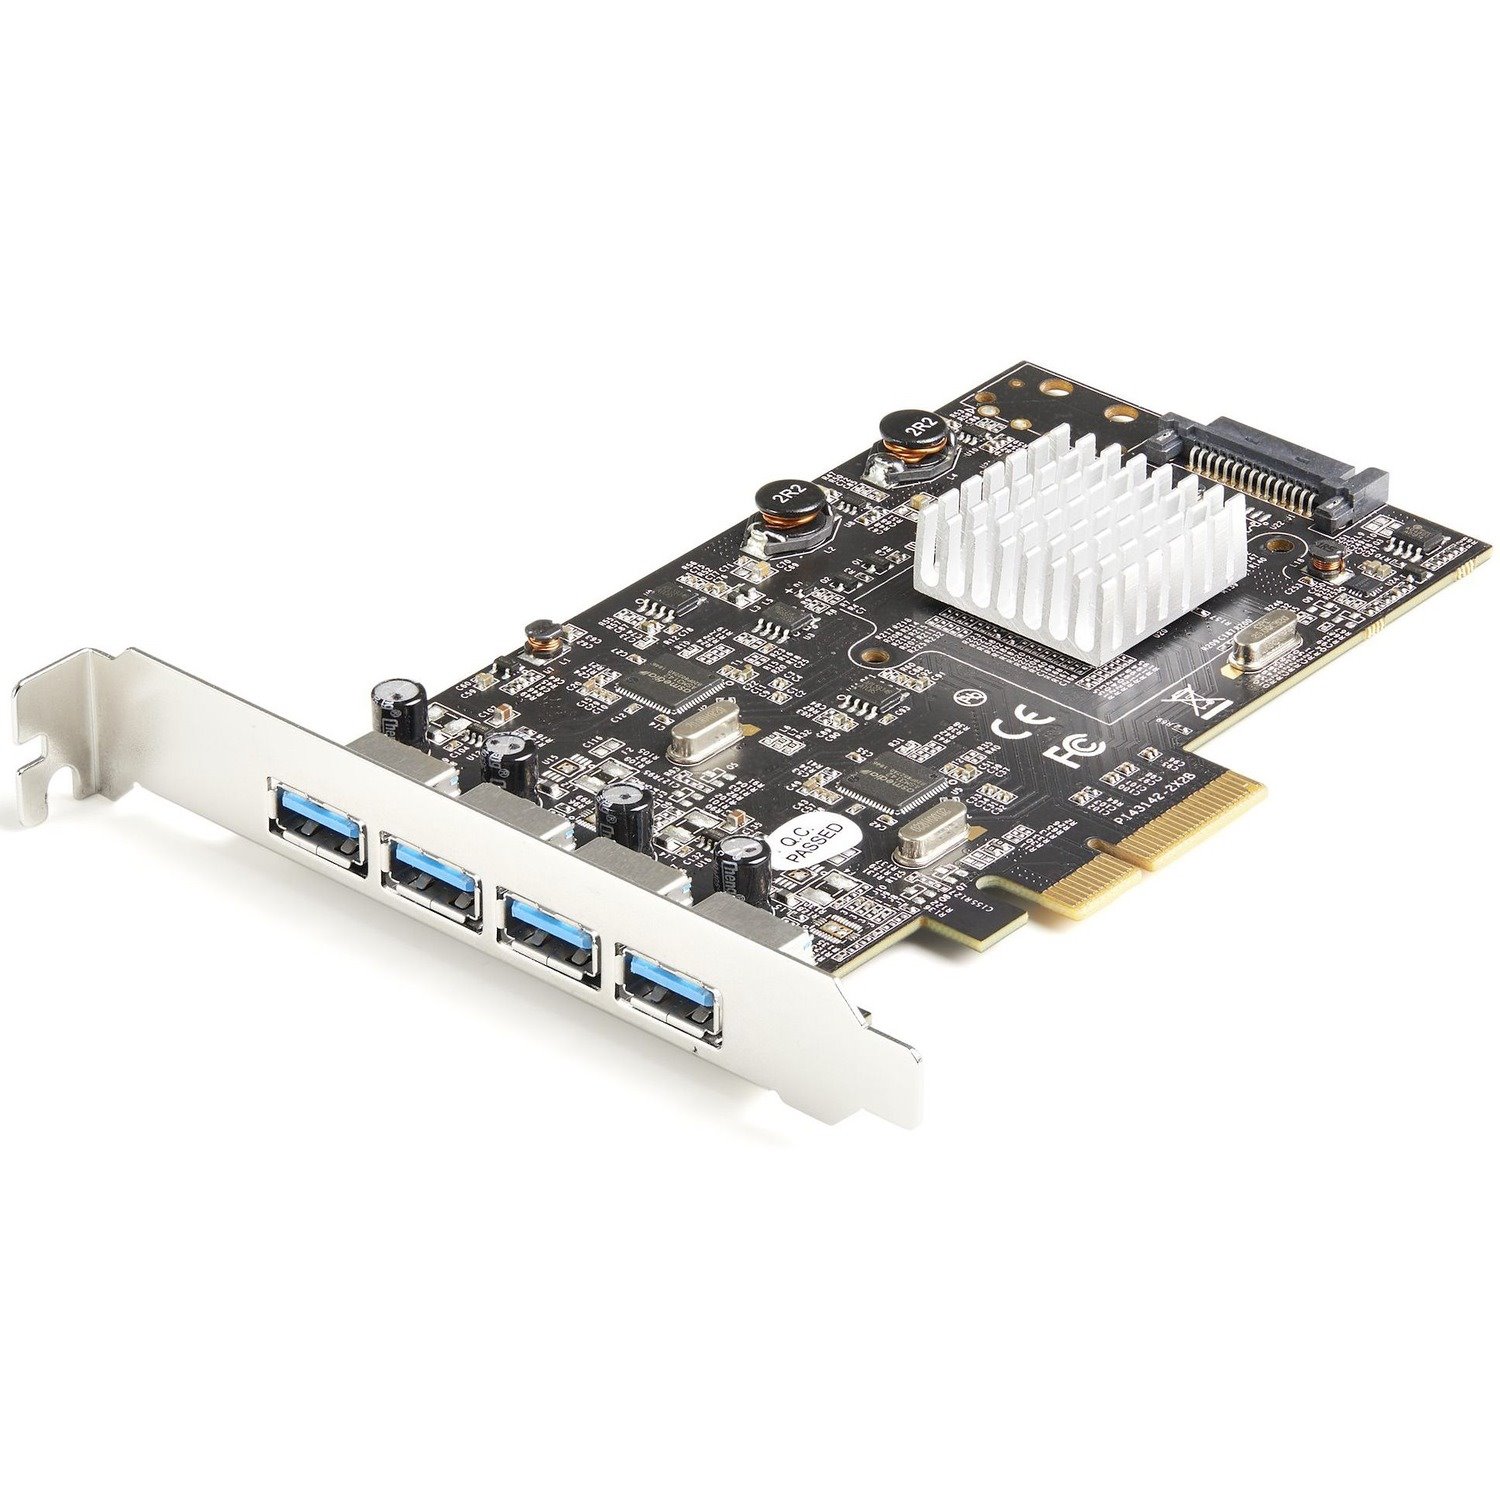 StarTech.com USB Adapter - PCI Express 2.0 x4 - Plug-in Card - Black